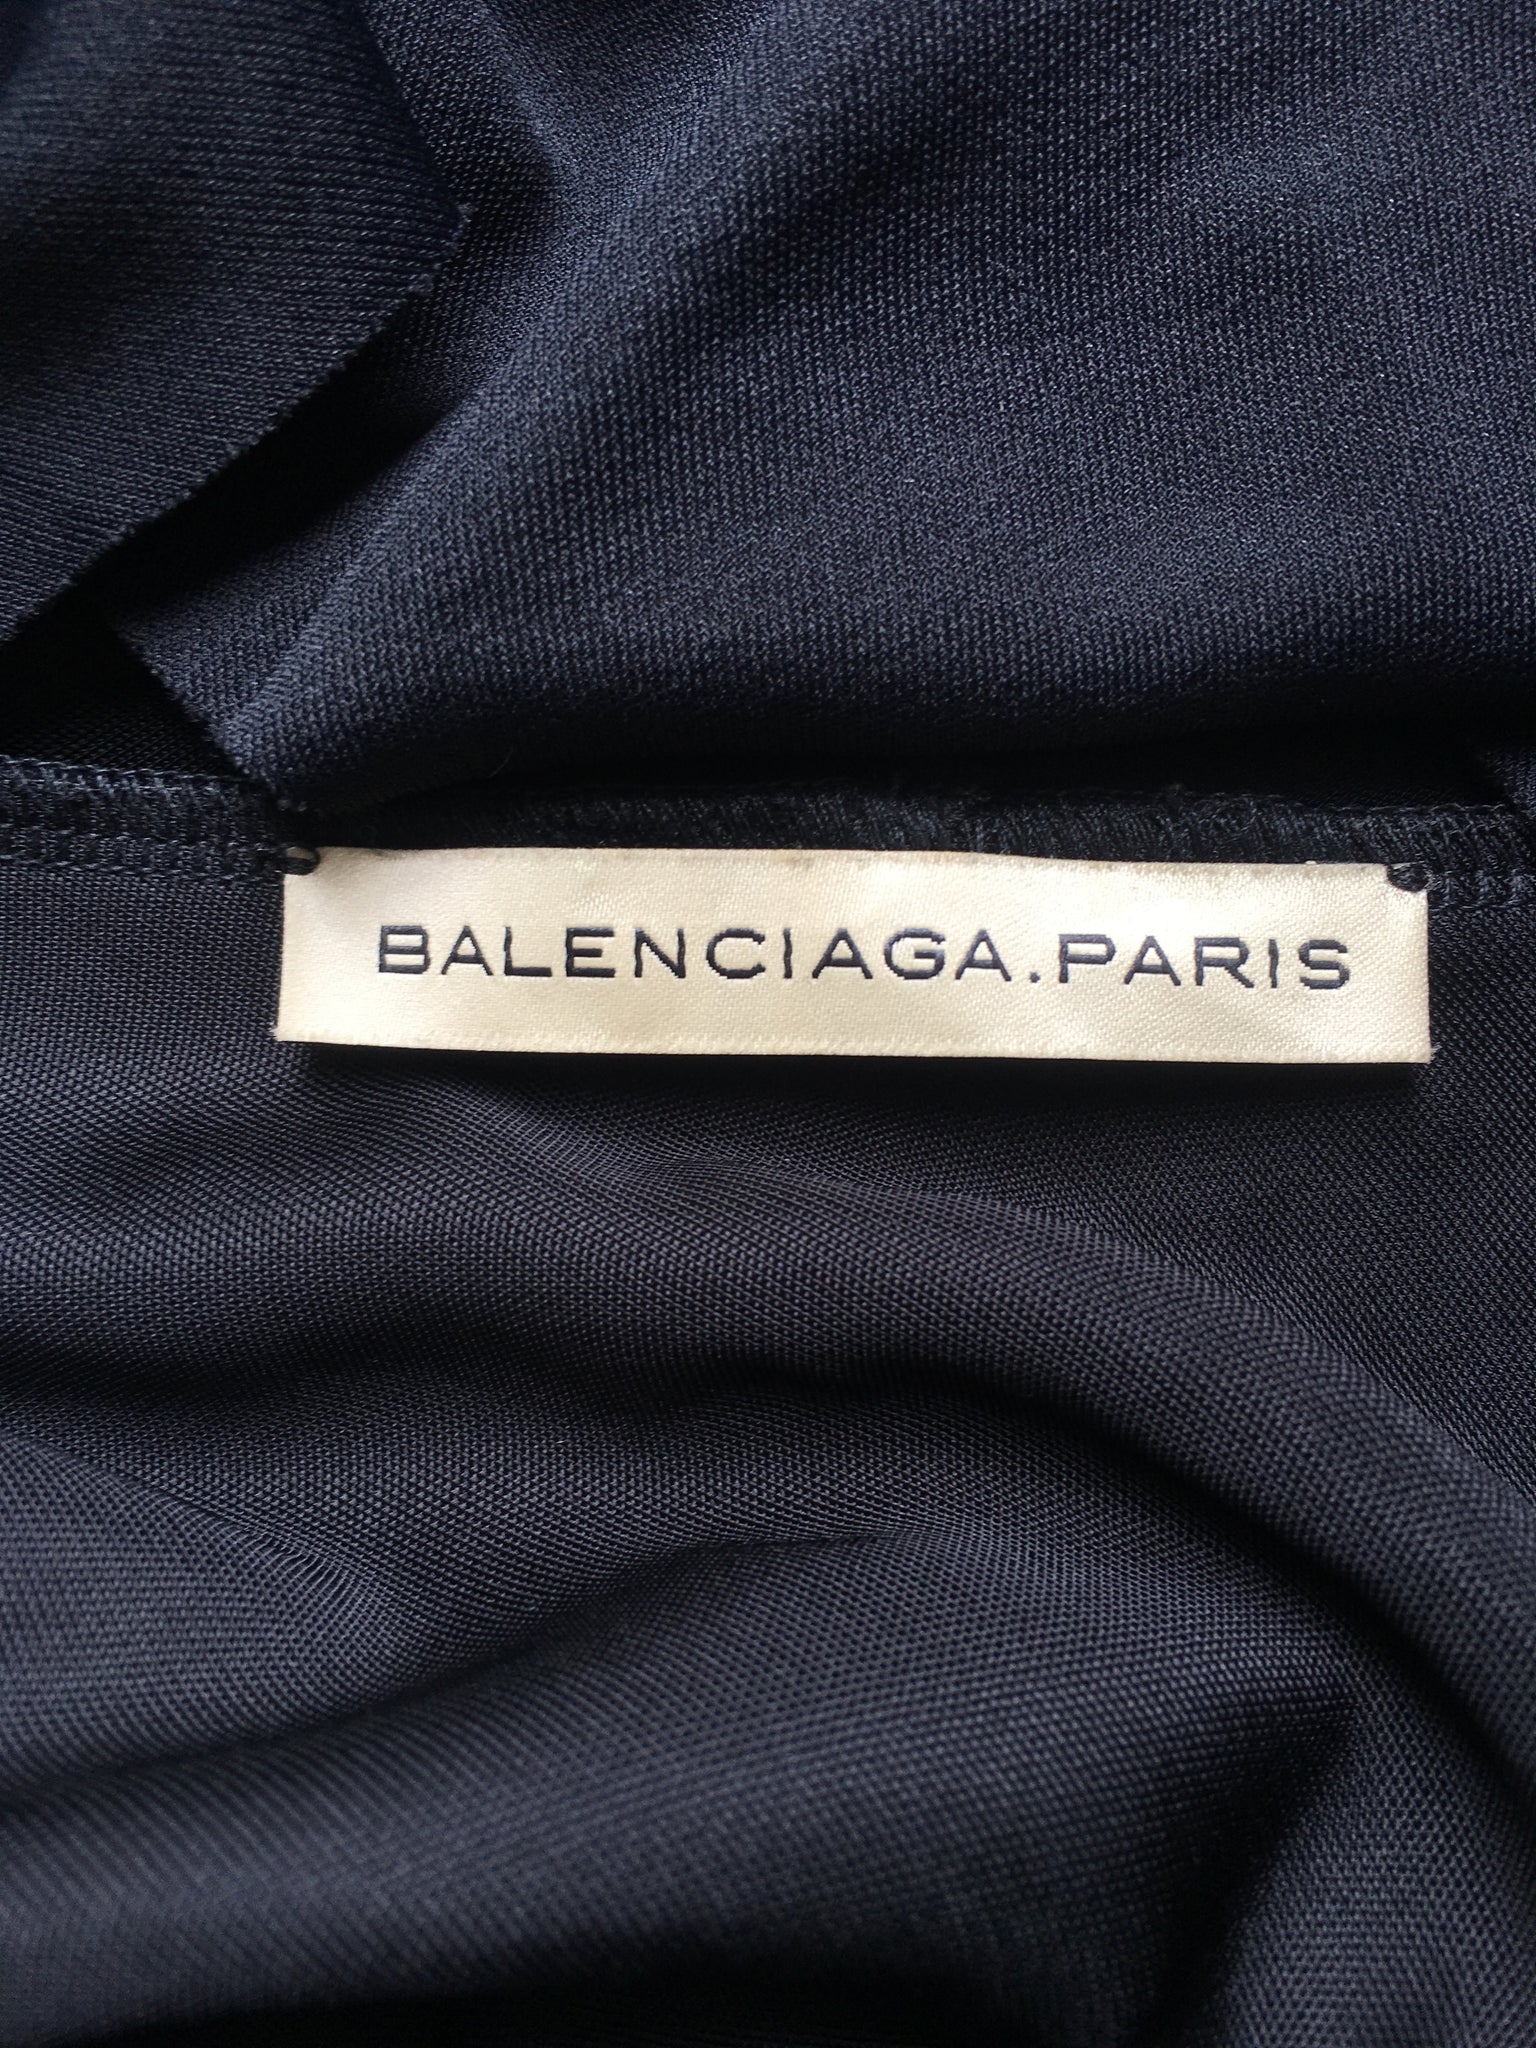 BALENCIAGA BY NICOLAS GHESQUIERE BLACK MODERNIST DRESS 2004